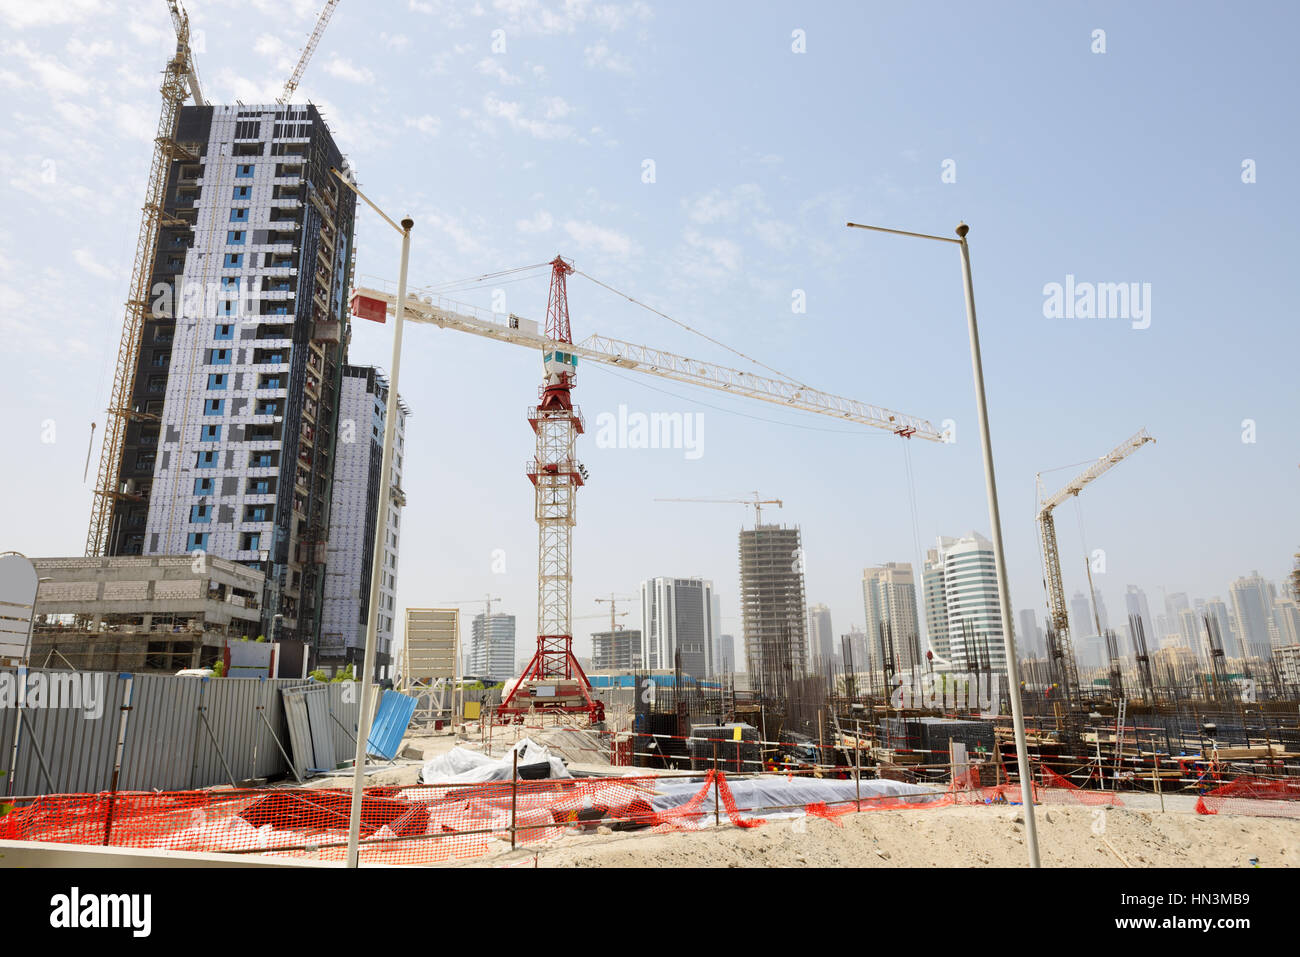 A construction site in Dubai city, UAE Stock Photo